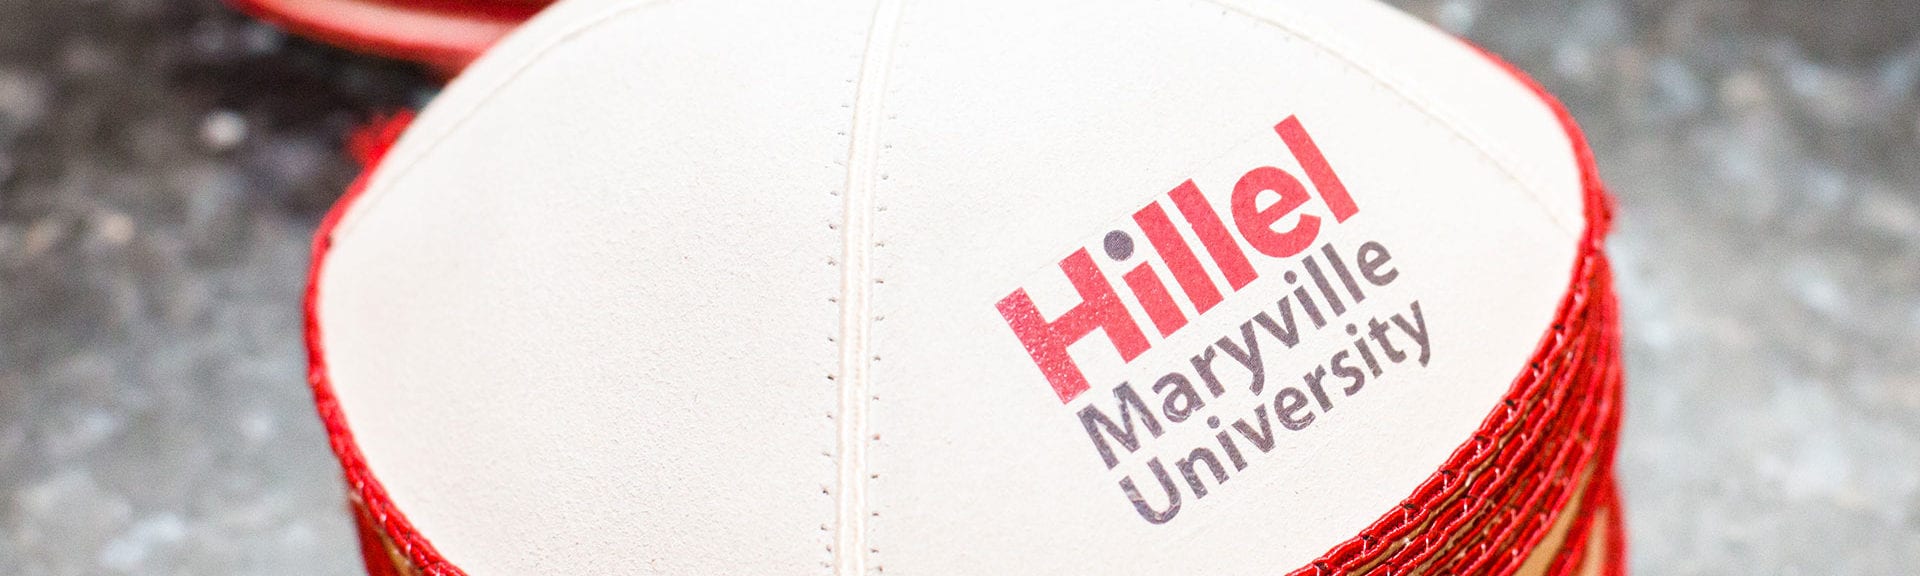 maryville hillel logo